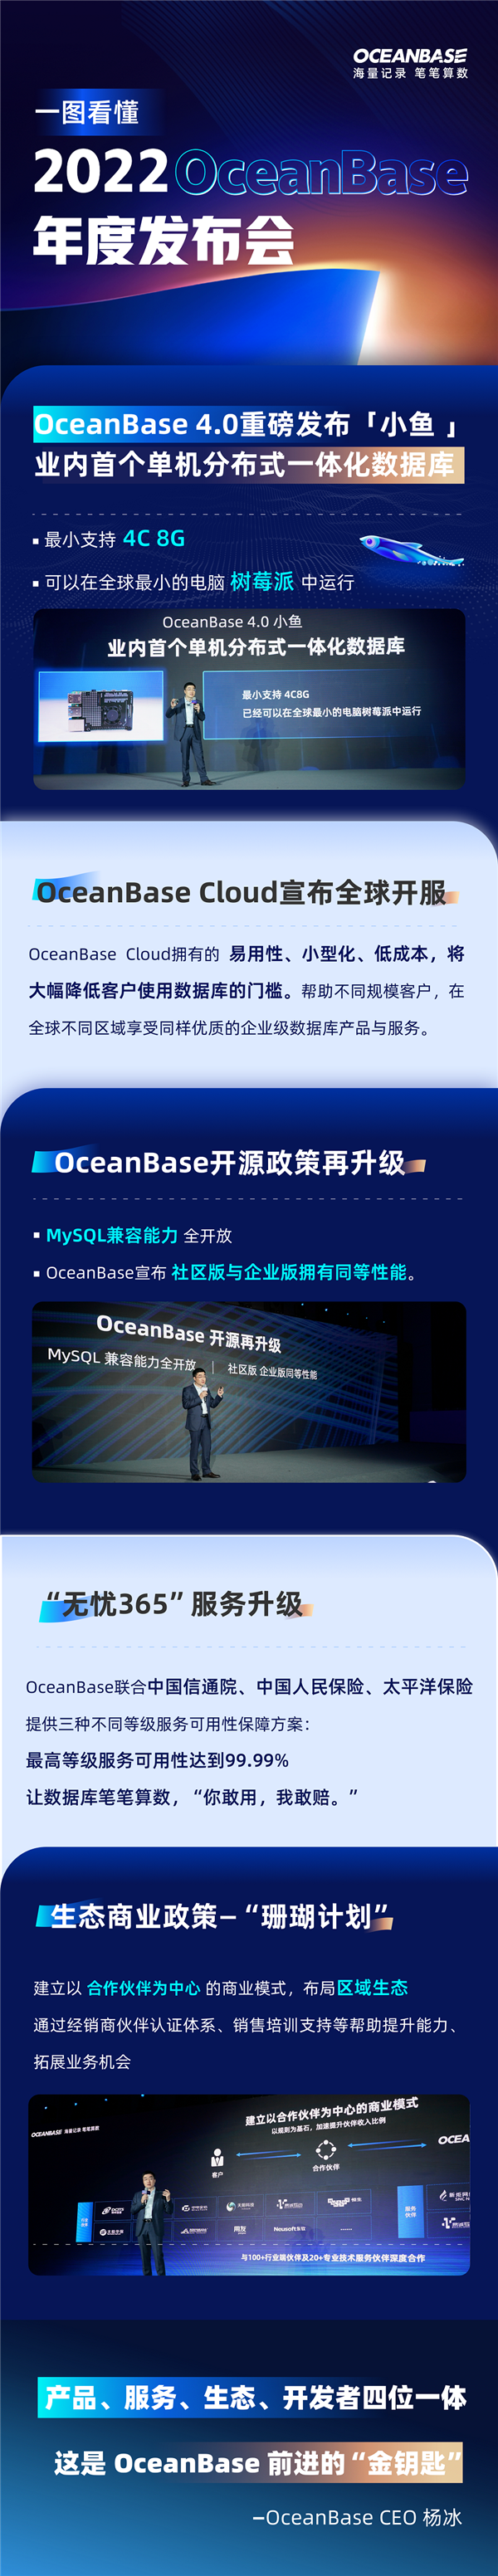 2022oceanbase发布国产分布式数据库